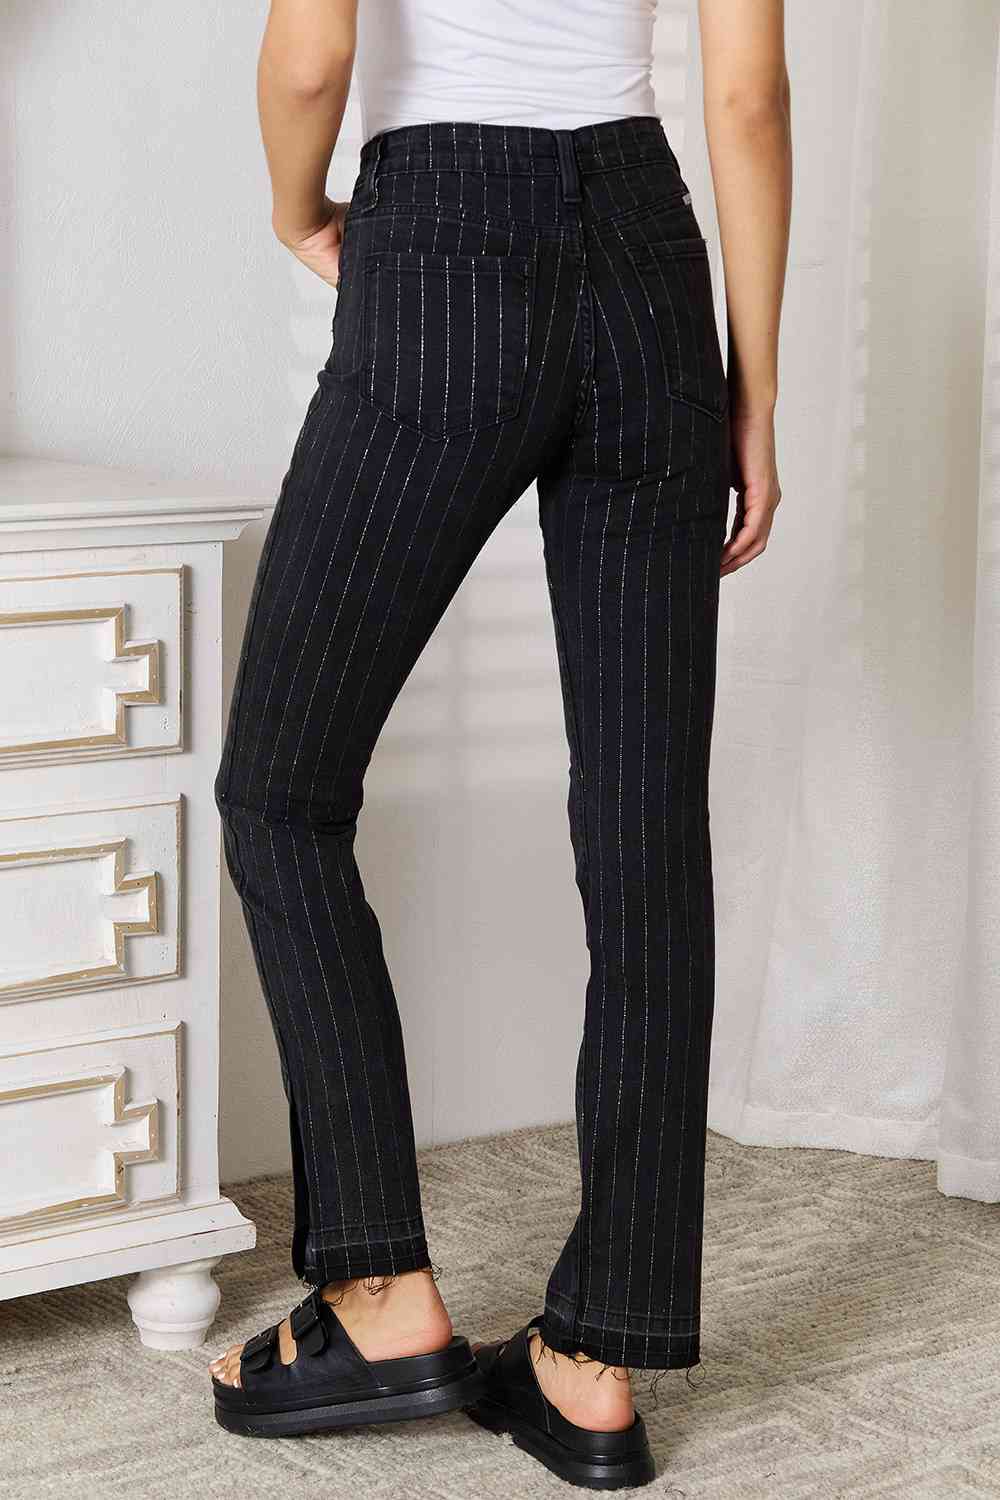 Noella Shimmery Striped Pants in Black